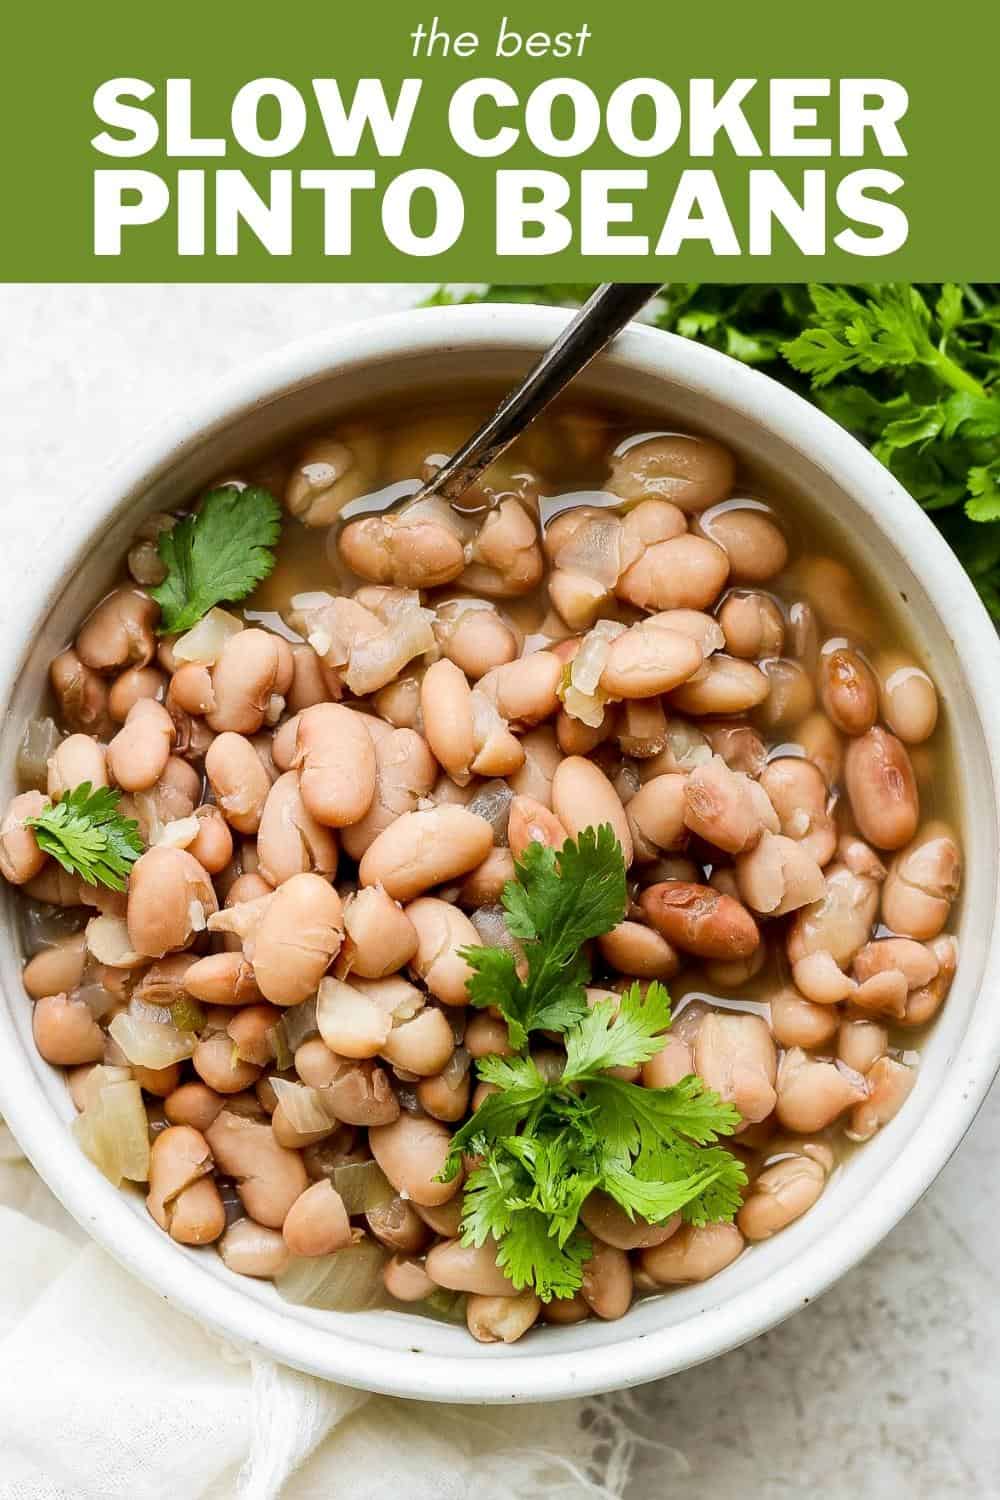 Crock Pot Pinto Beans - Isabel Eats